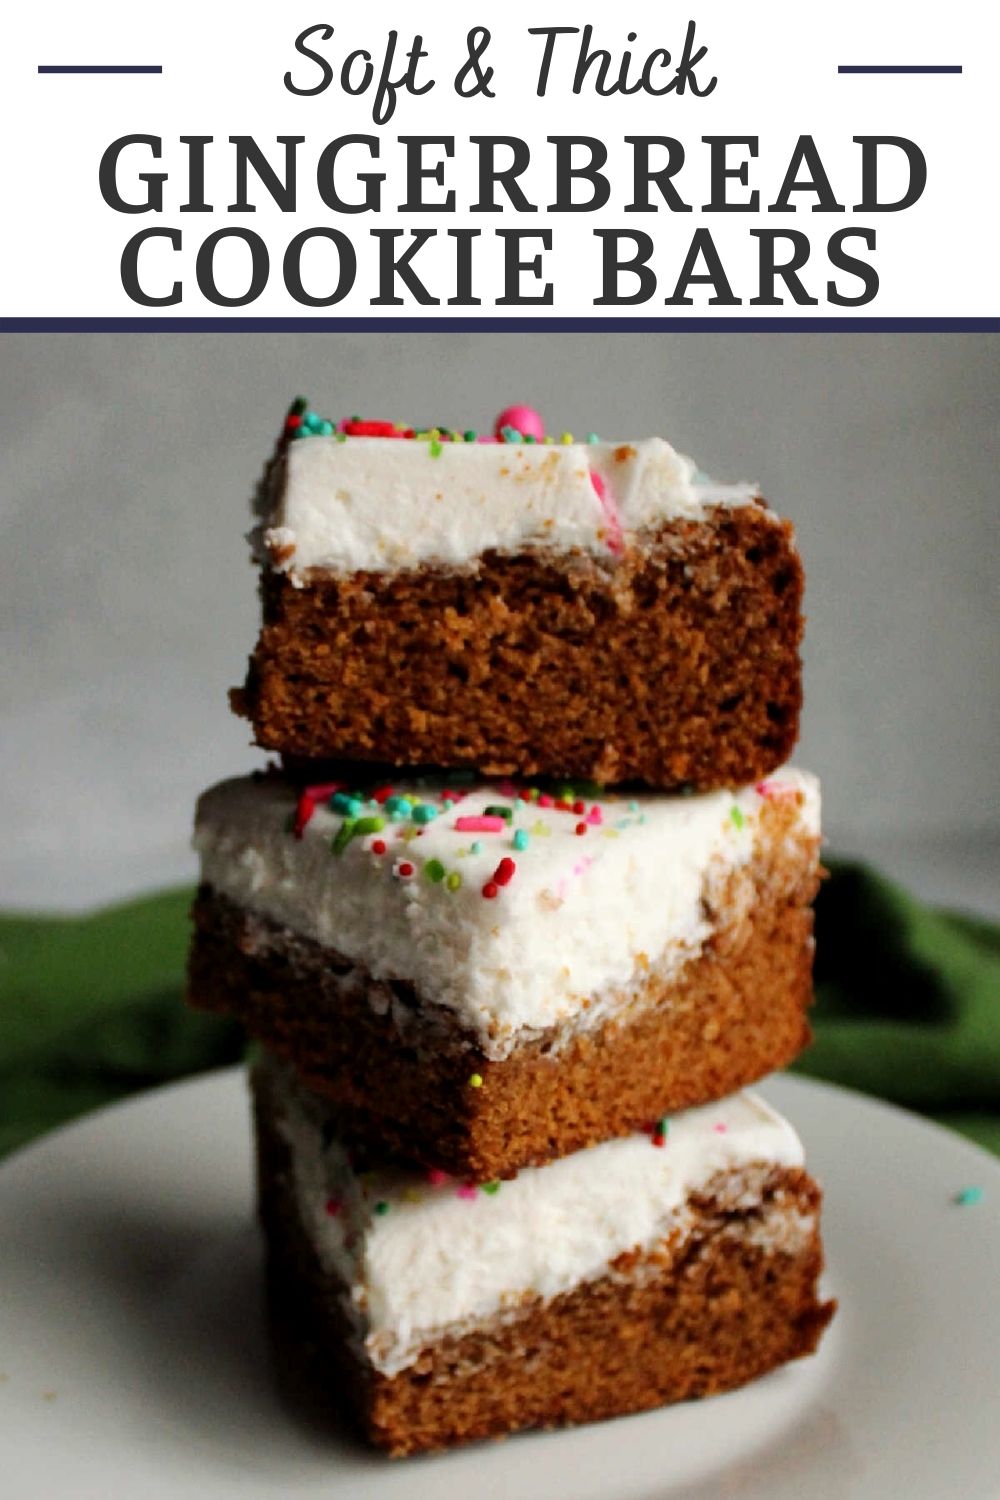 gingerbread cookie bars